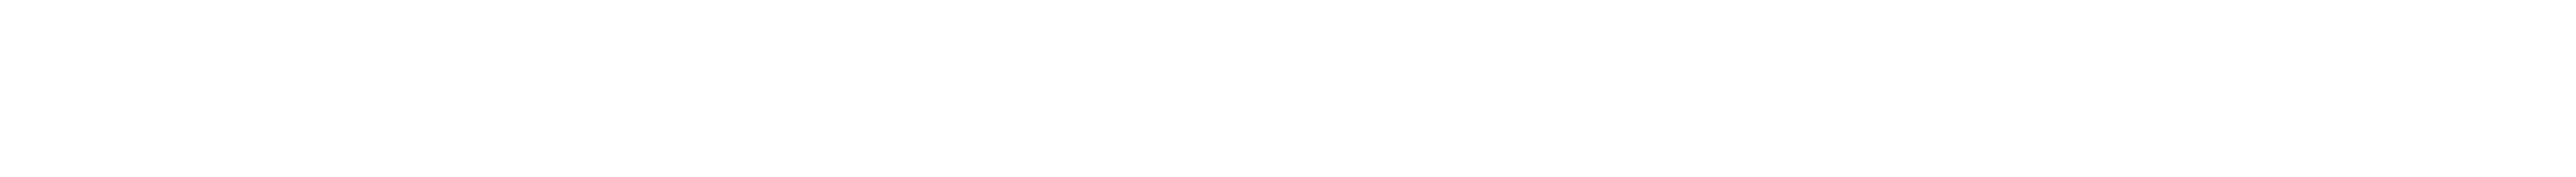 East Wintergarden logo